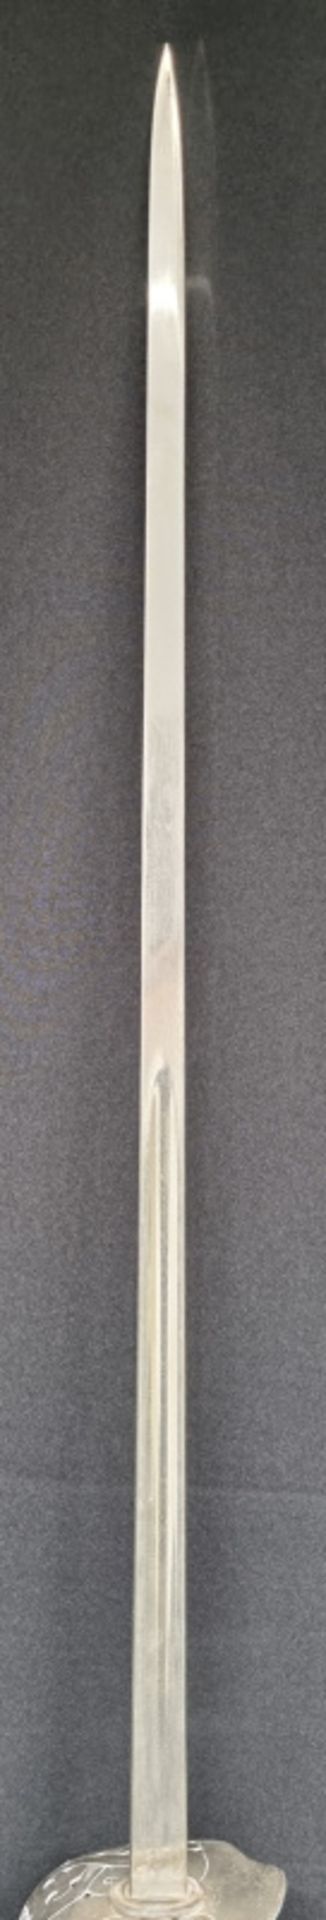 R E Ceremonial Sword - serial number W N005 E - Image 5 of 9